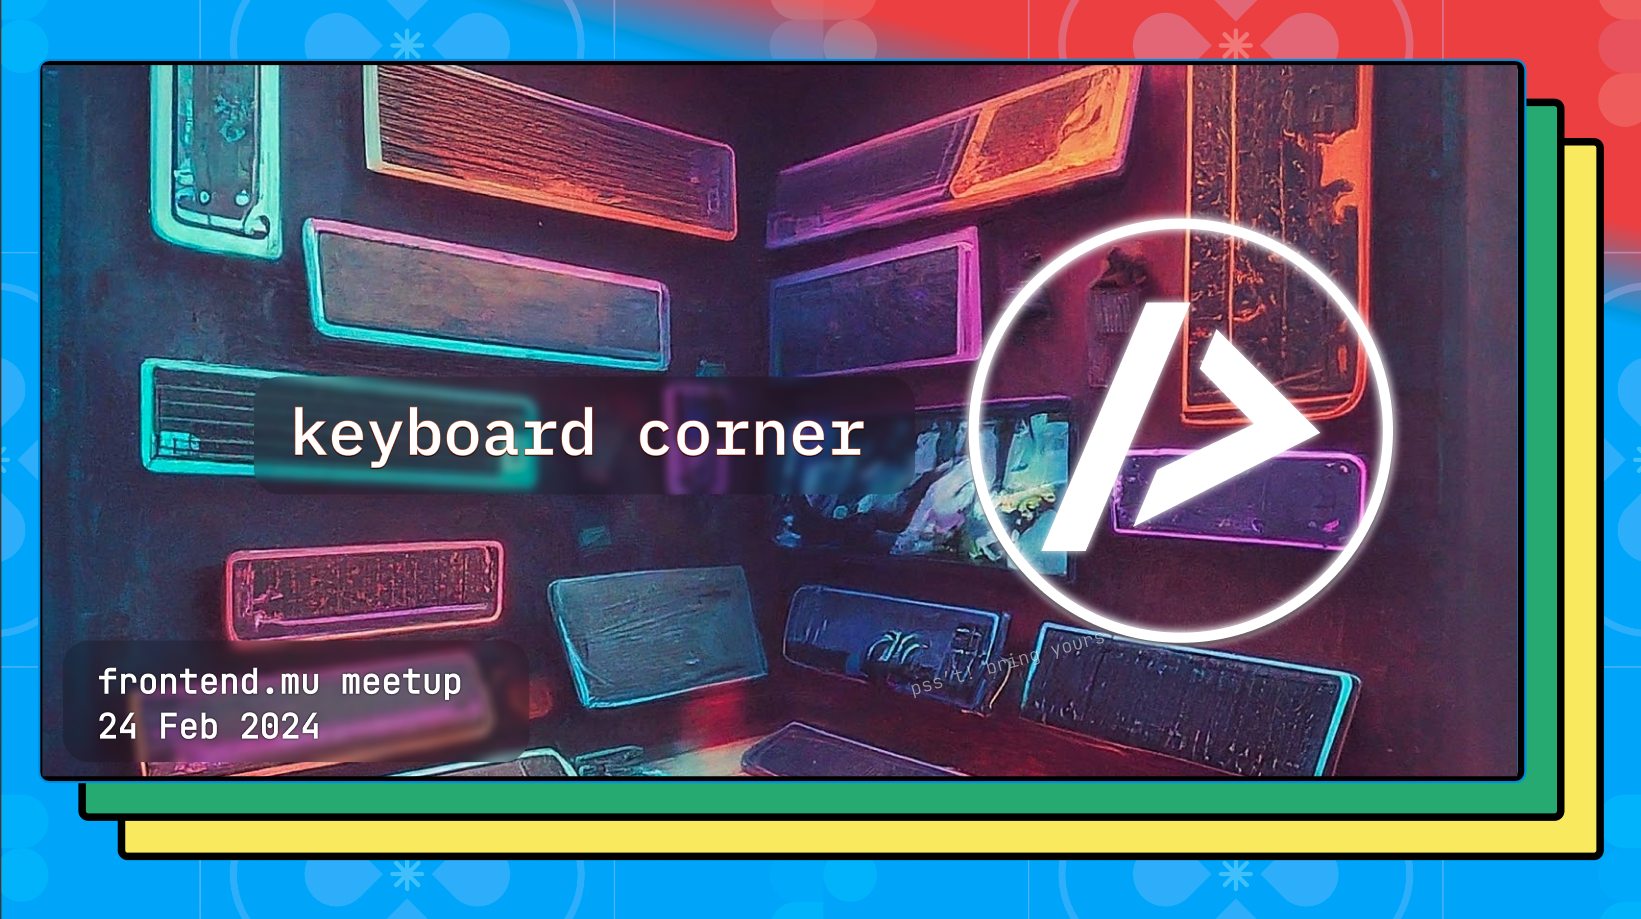 keyboard-corner-poster-frontendmu-meetup-2024.png